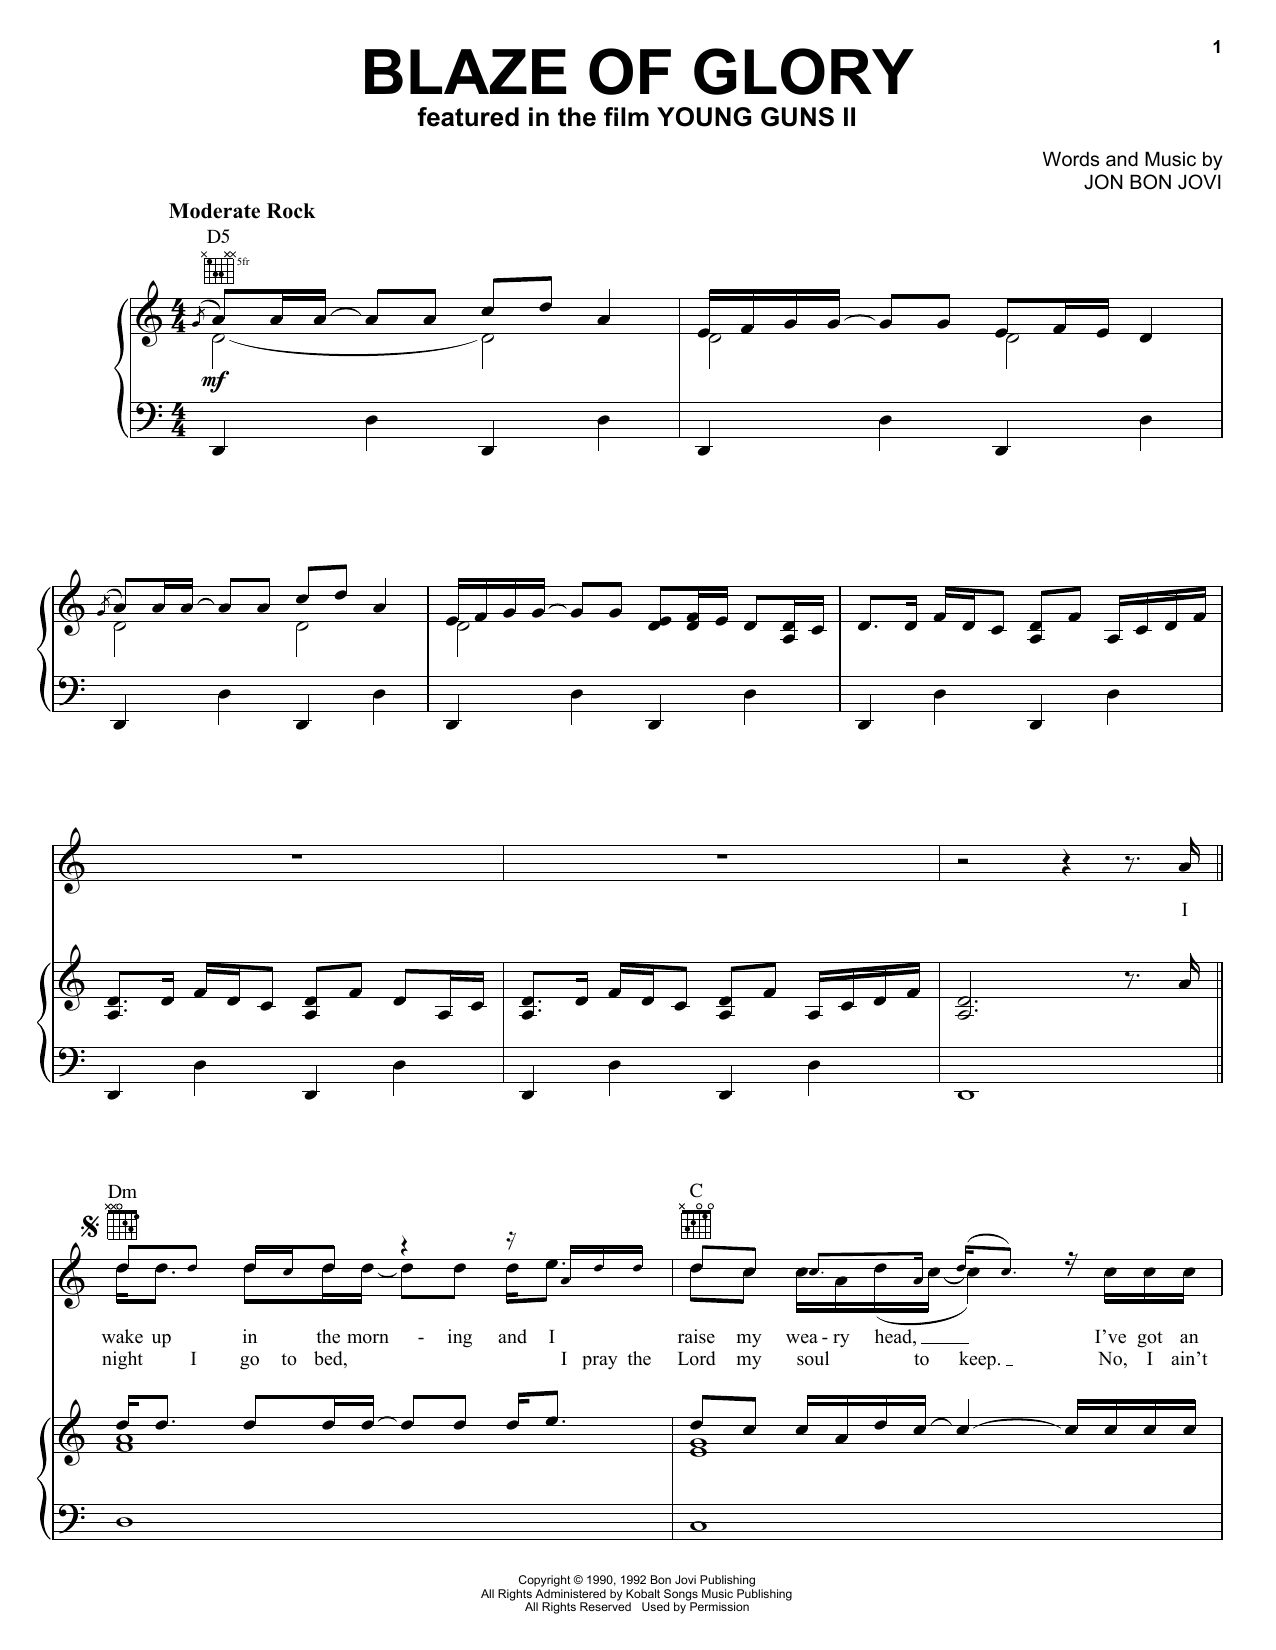 Jon Bon Jovi Blaze Of Glory Sheet Music Notes & Chords for Guitar Tab - Download or Print PDF